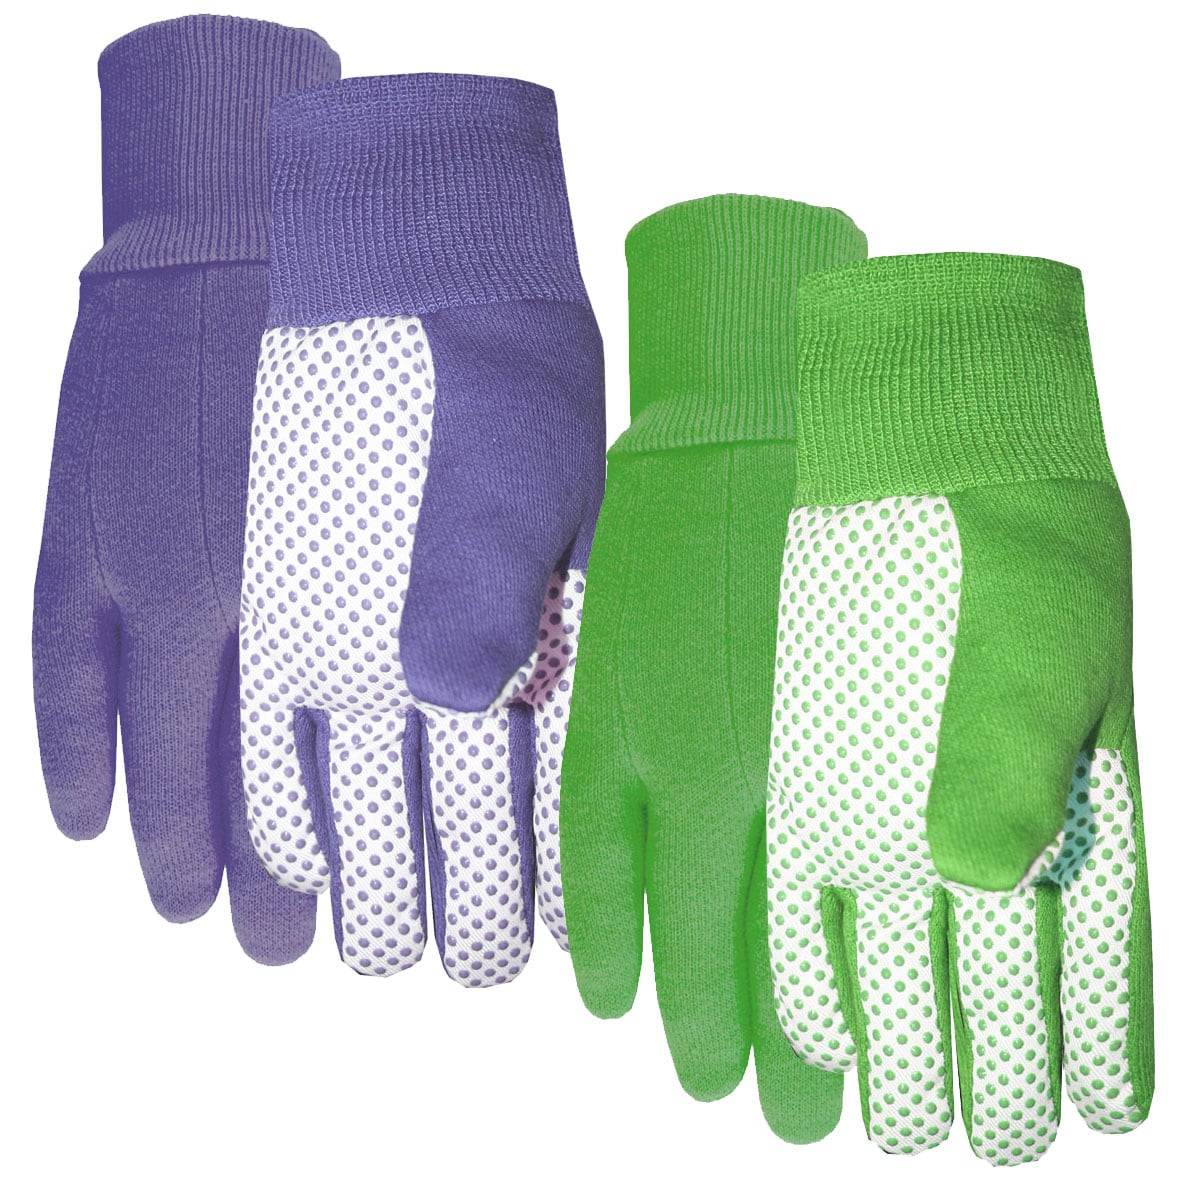 Prosourcefit Grippy Yoga Gloves